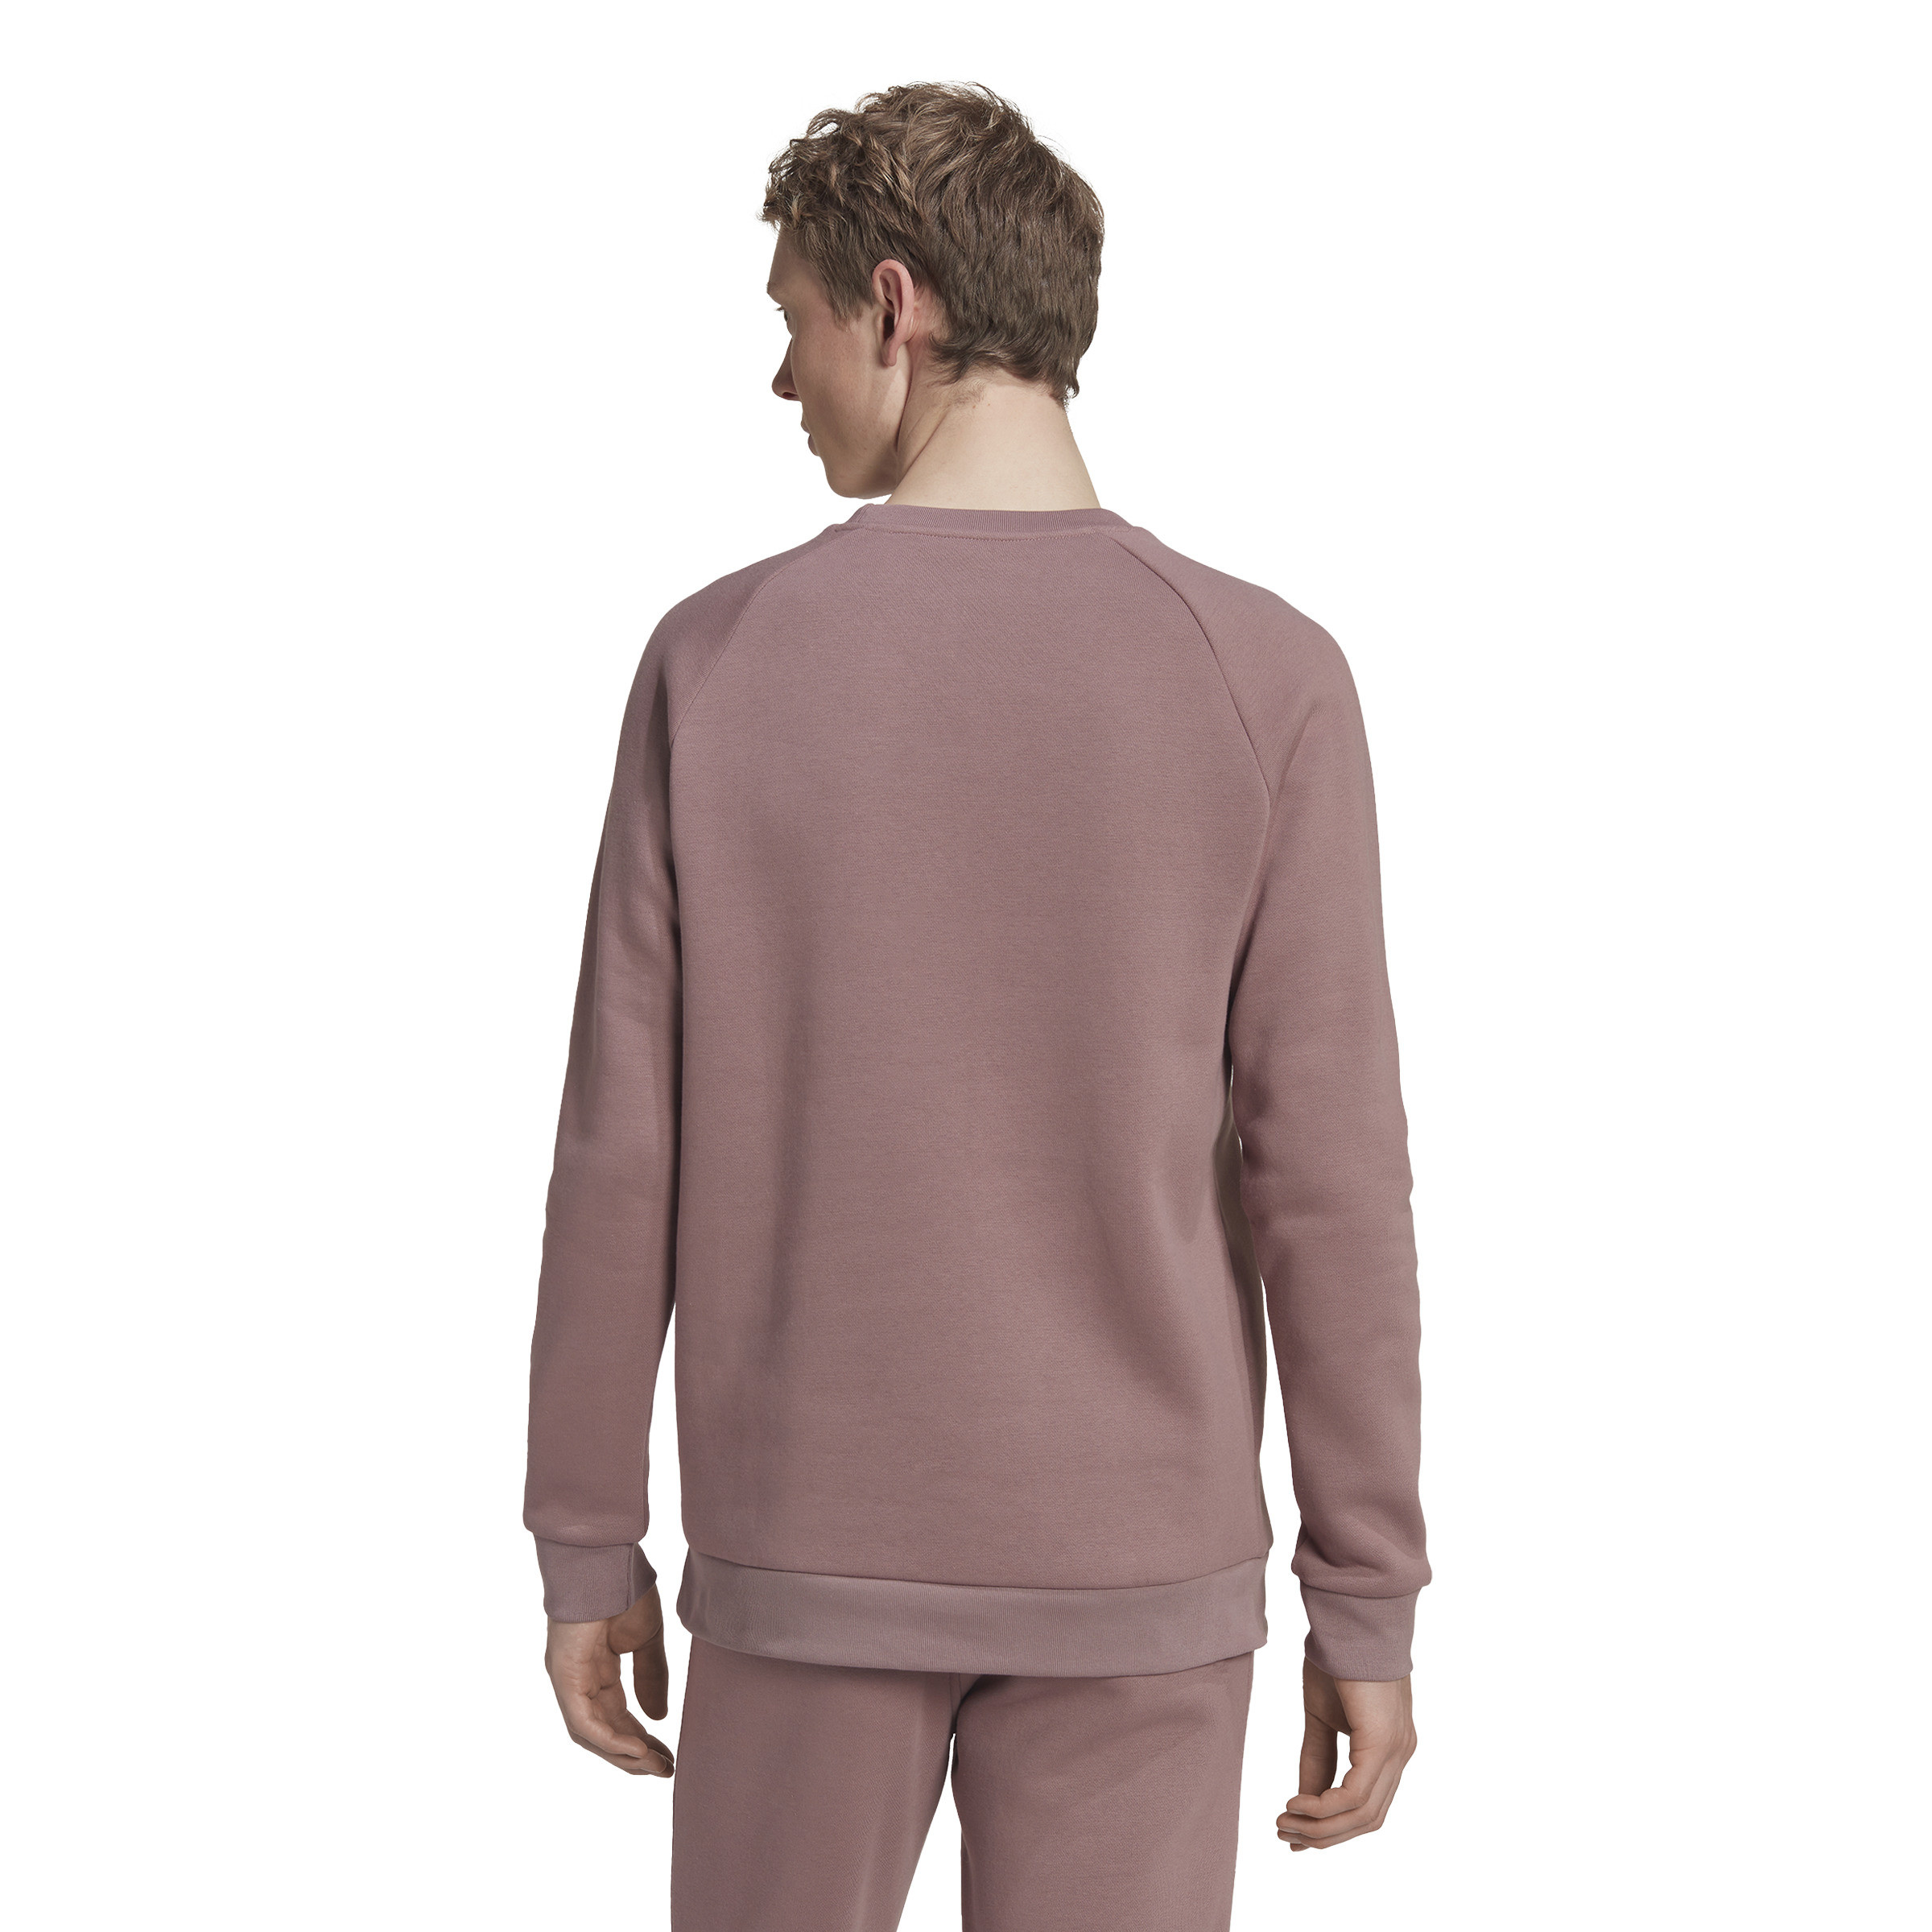 Adidas - Adicolor essentials trefoil crewneck sweatshirt, Antique Pink, large image number 3